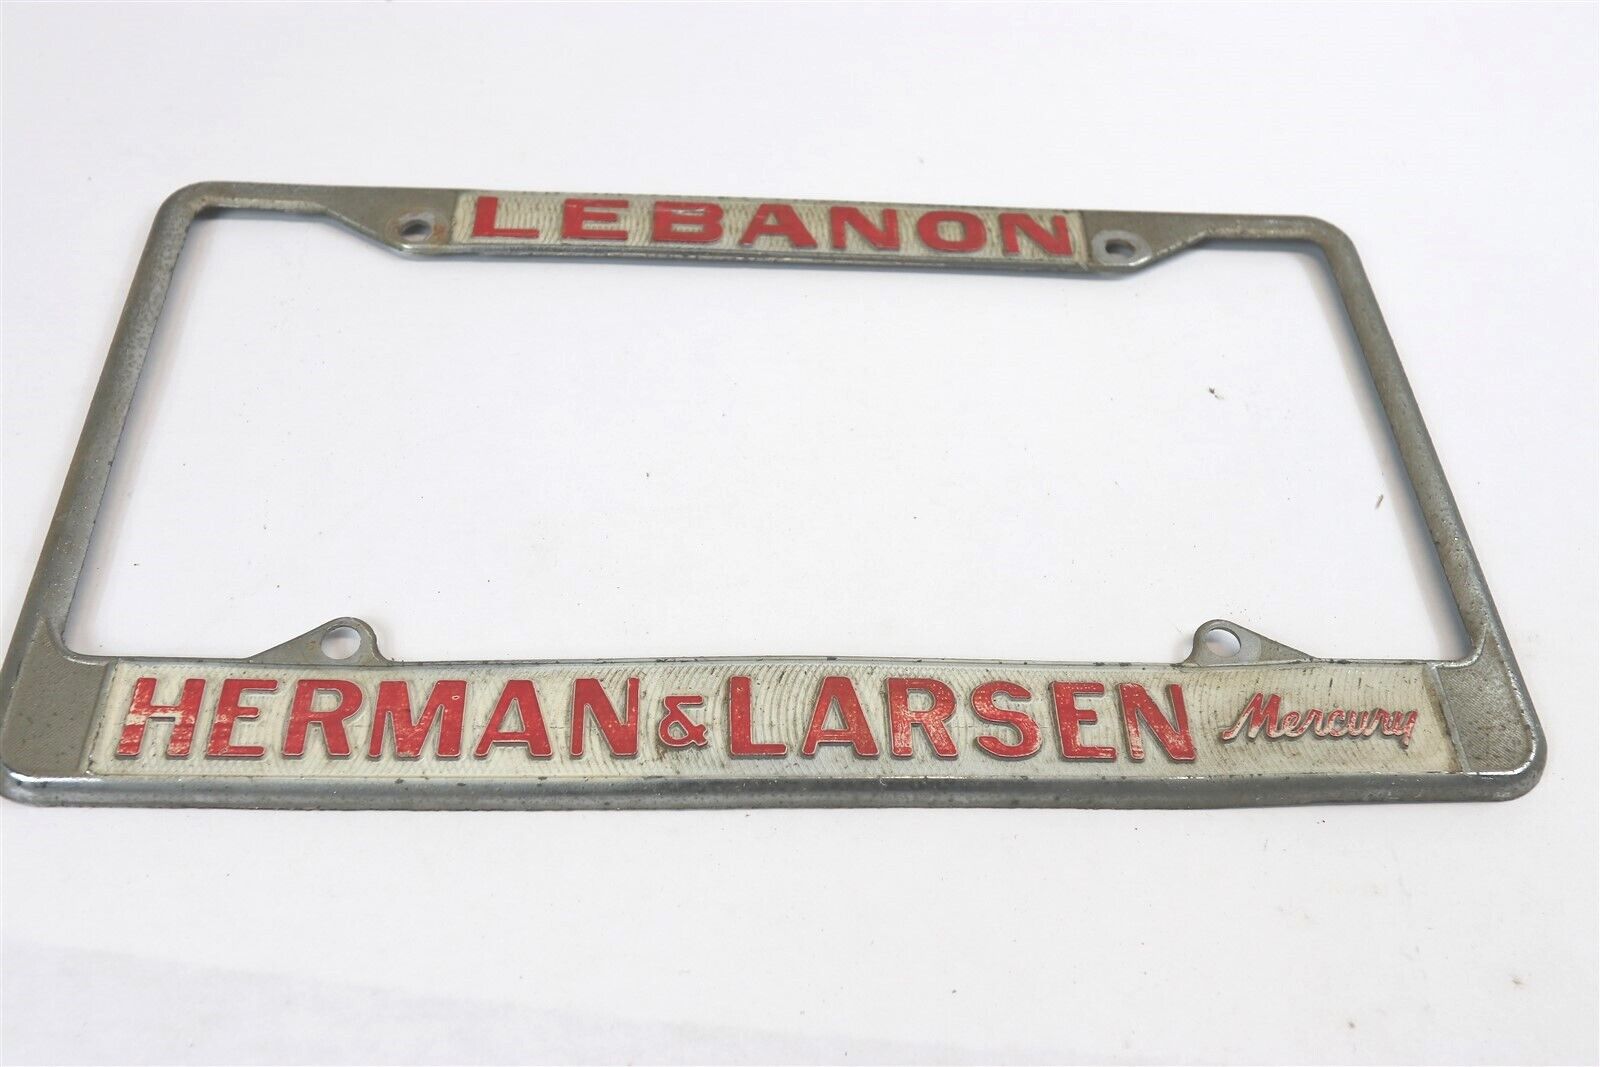 VINTAGE HERMAN & LARSEN MERCURY DEALERSHIP LEBANON METAL LICENCE PLATE FRAME 